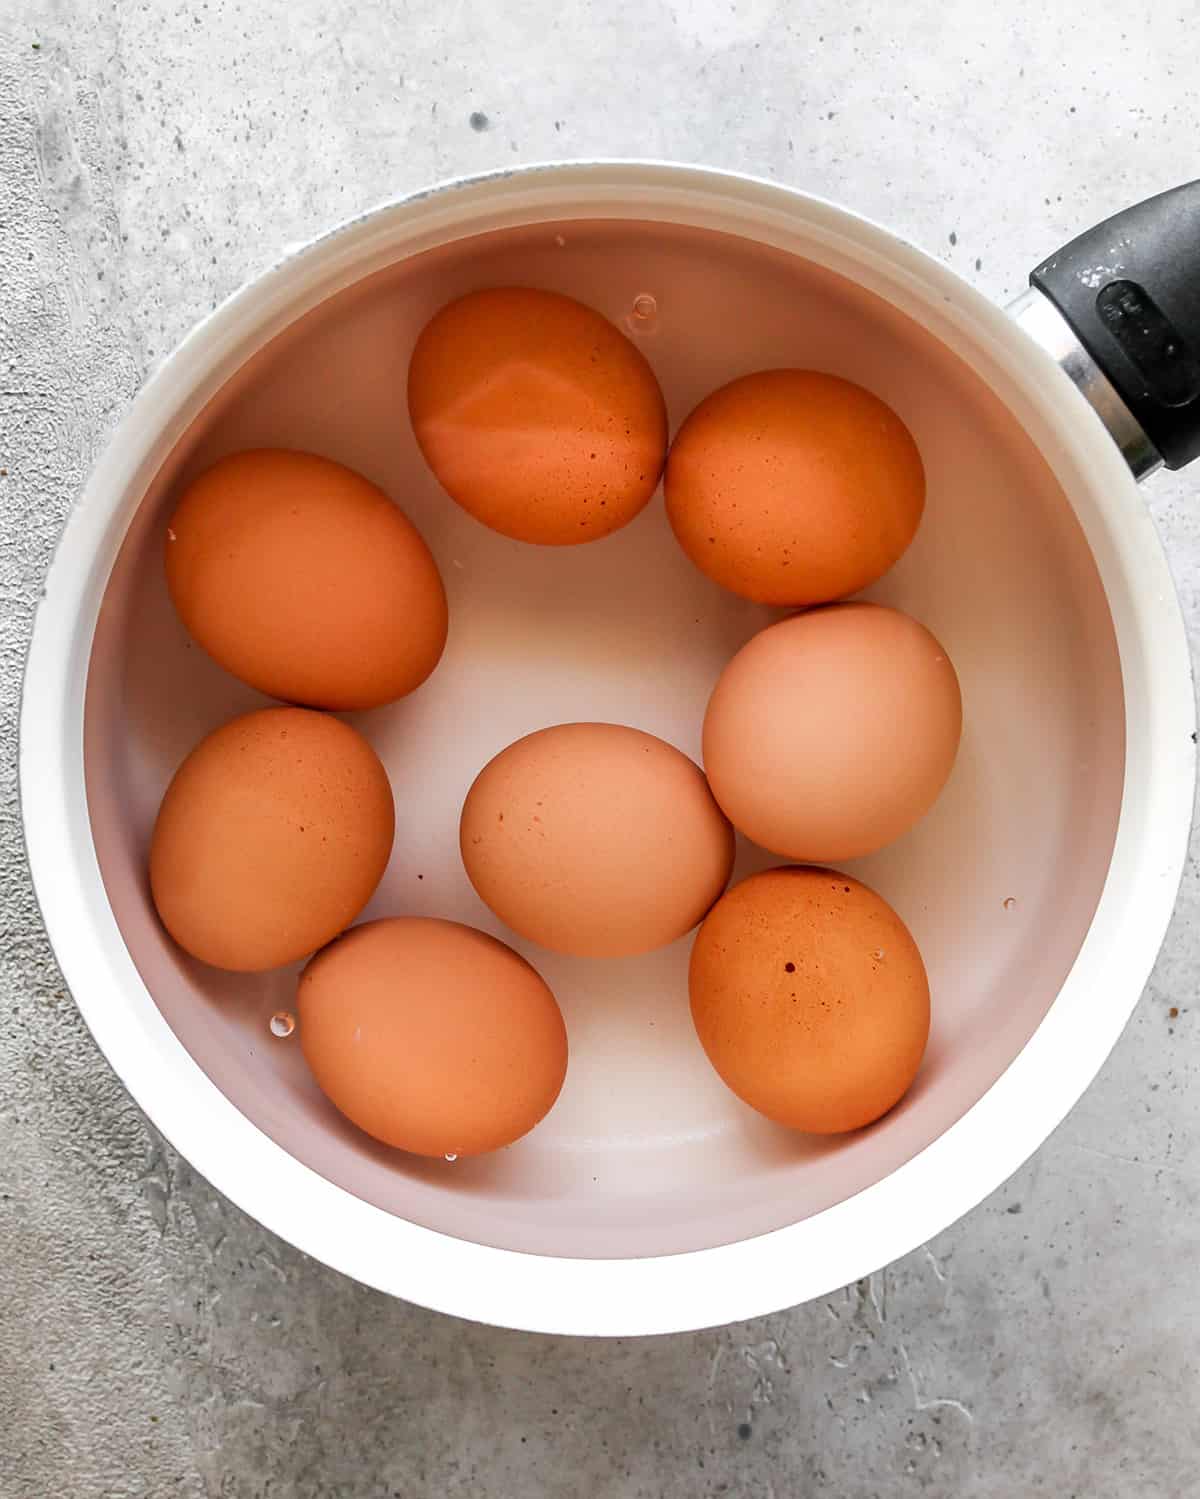 How to Make Egg Salad - hard boiling eggs